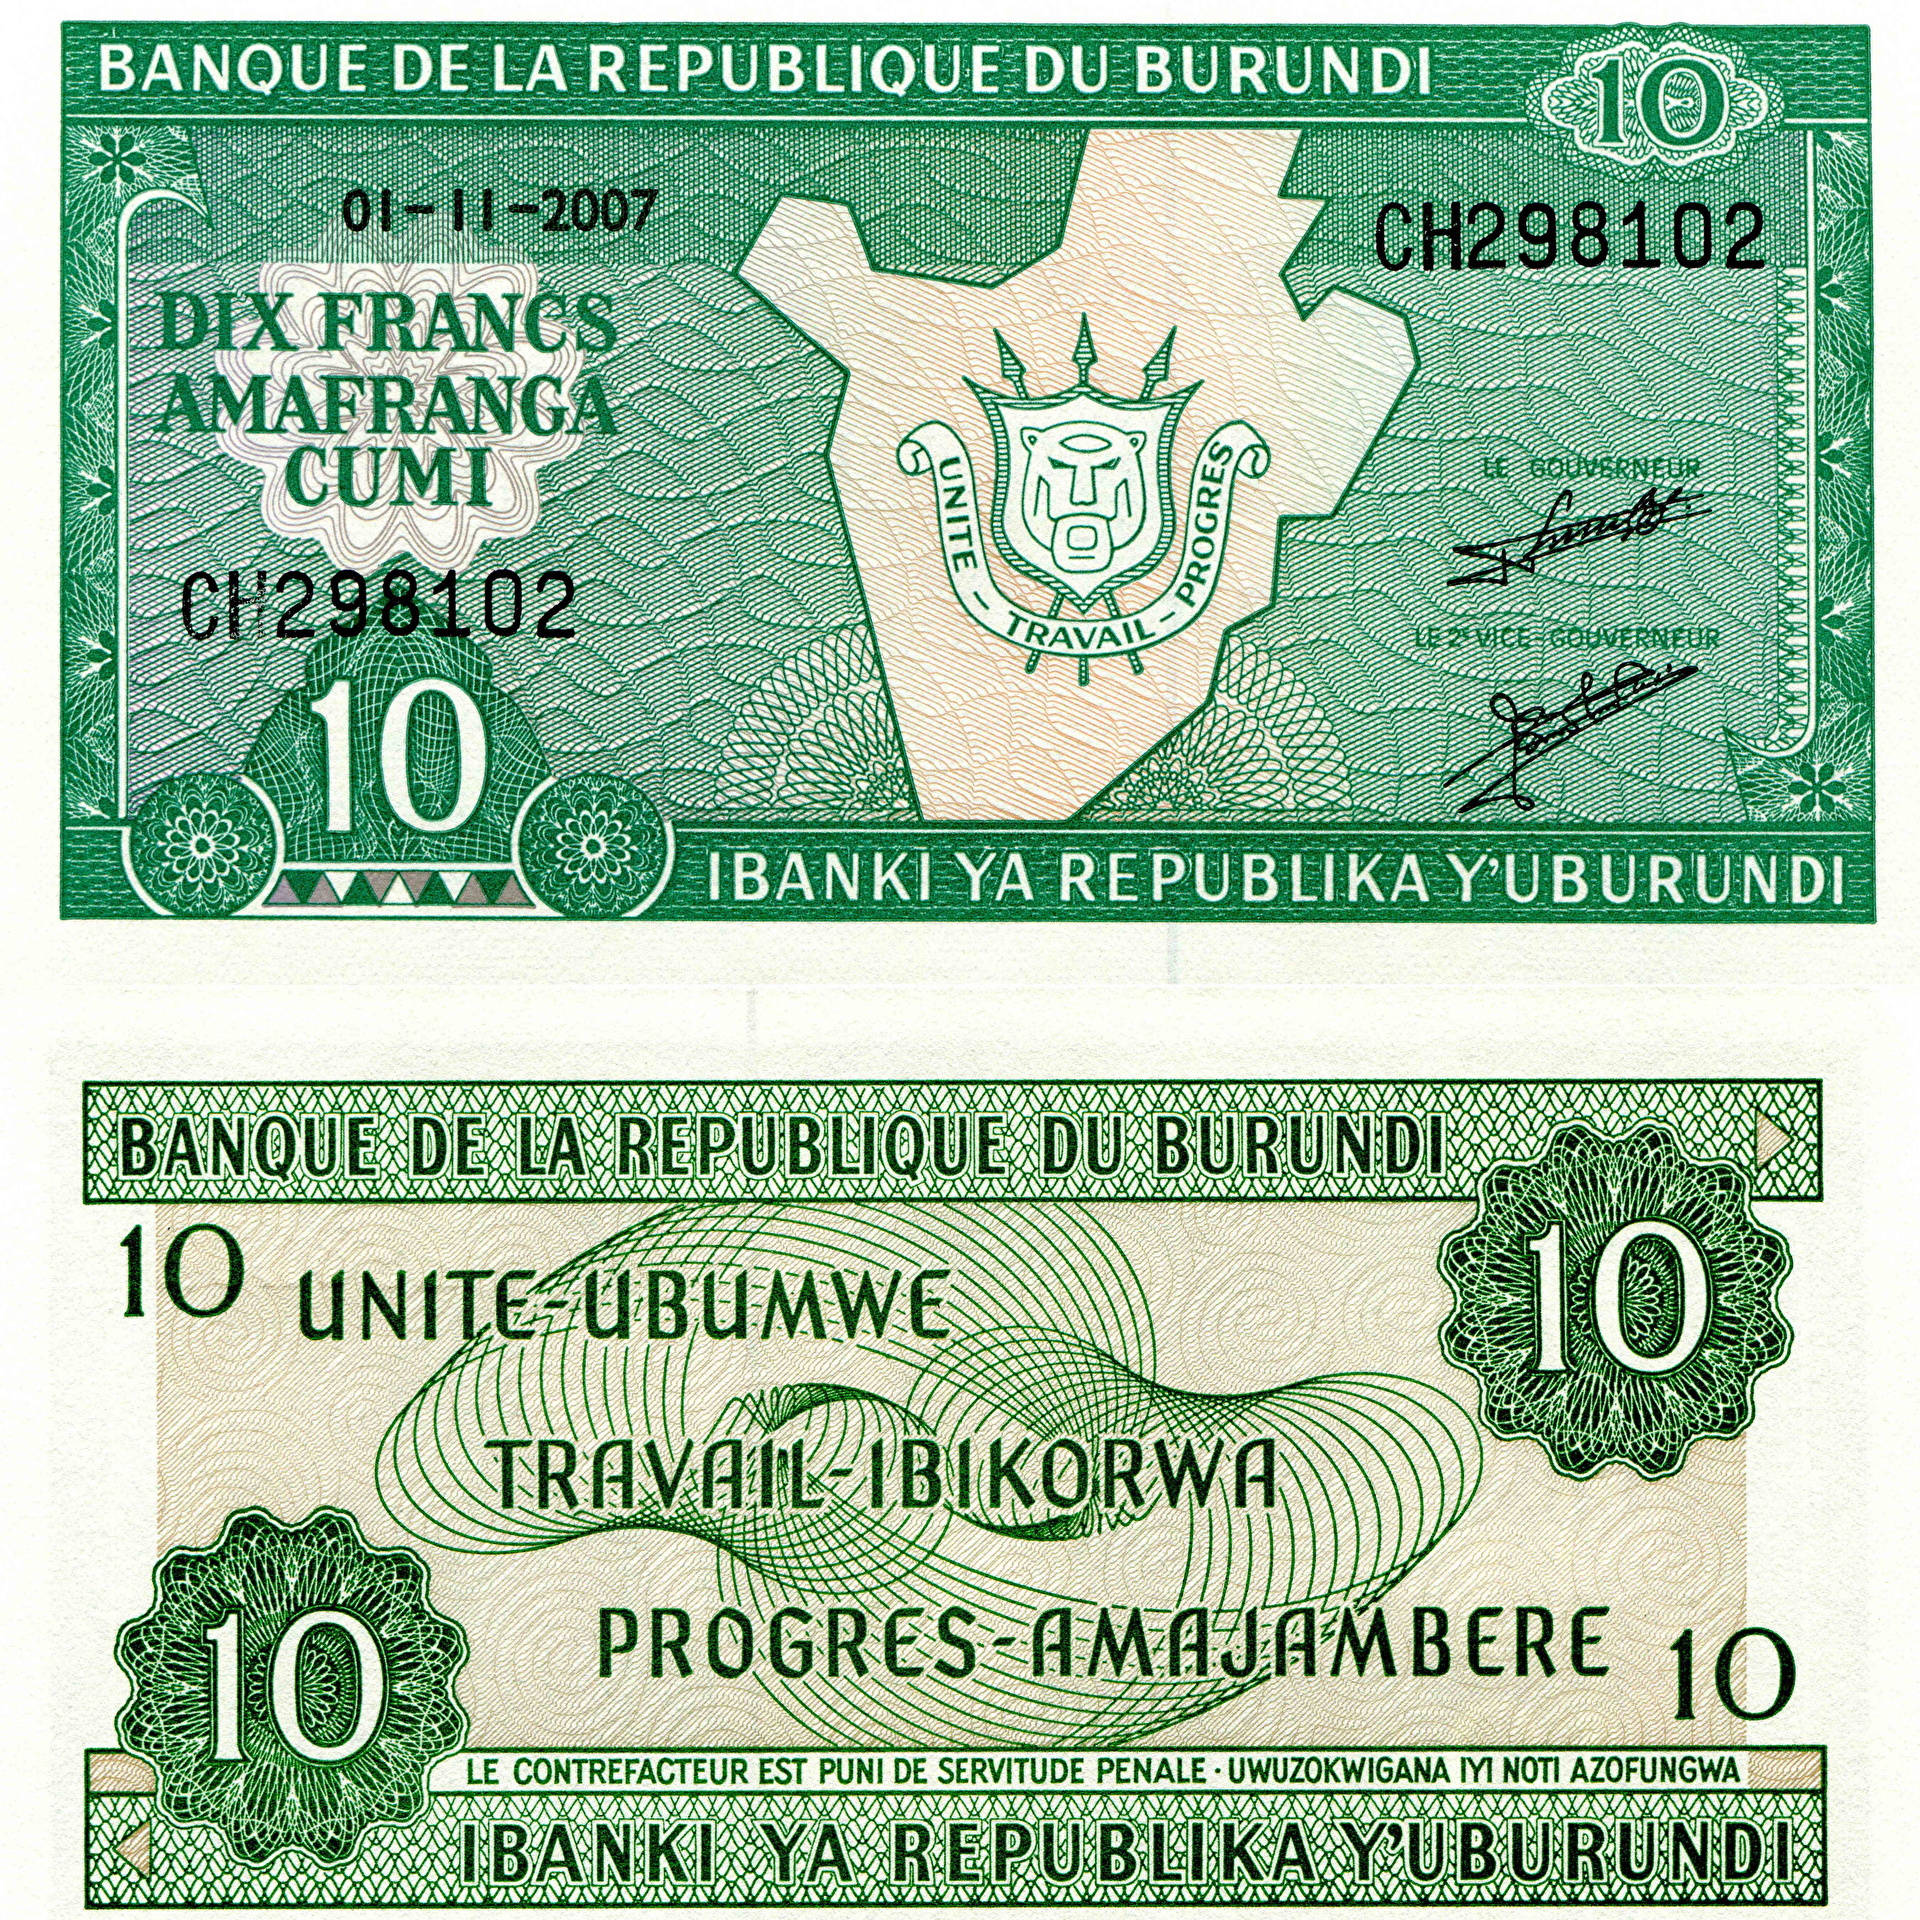 Burundi Franc Currency Picture